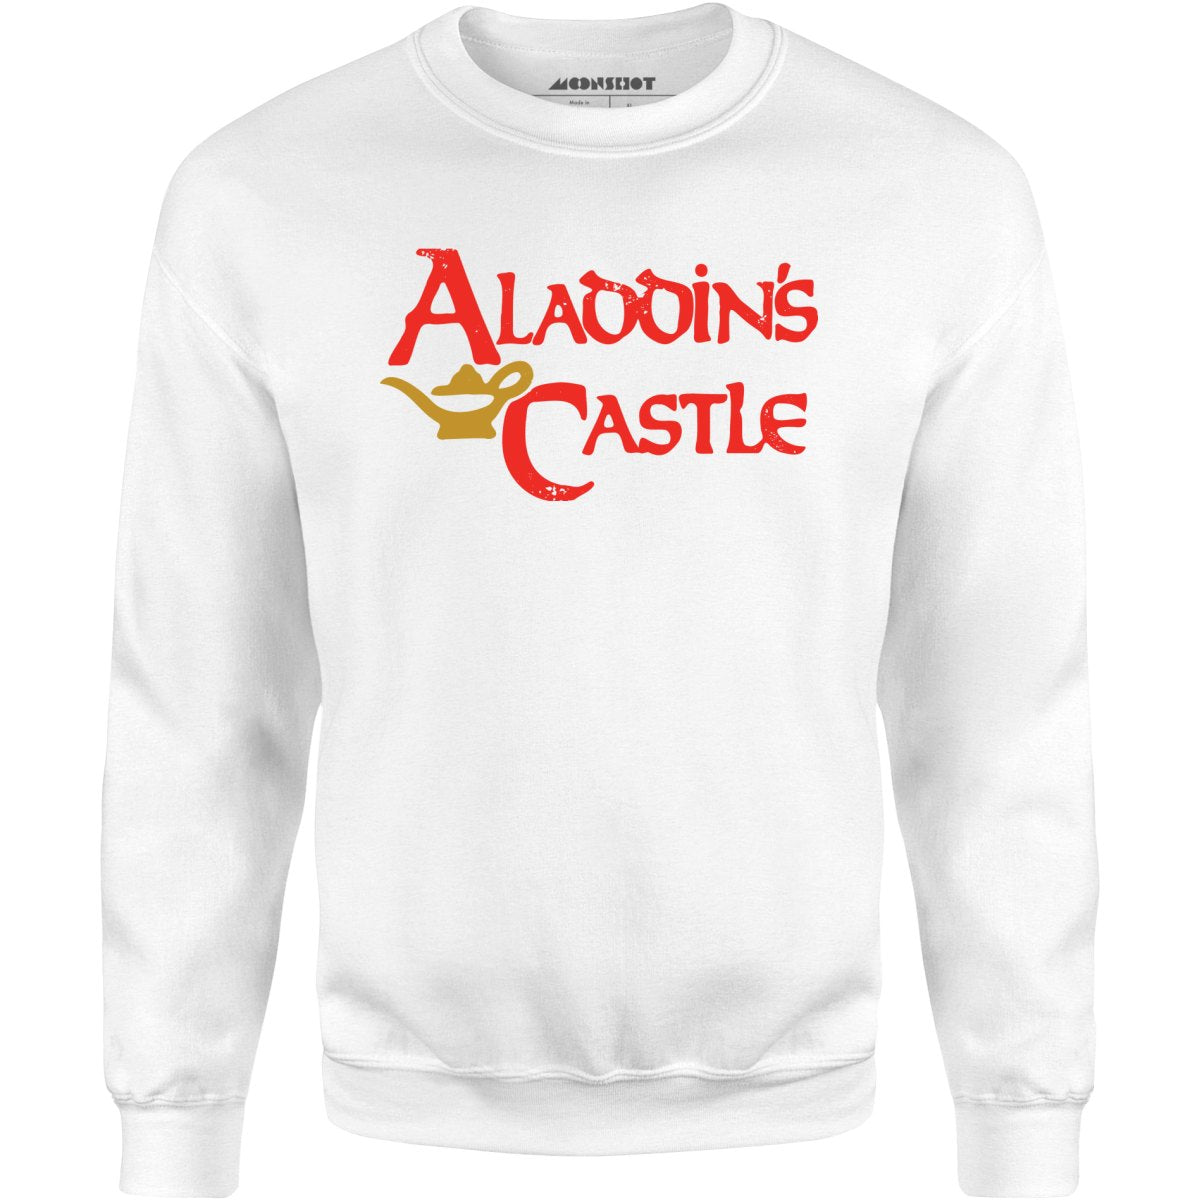 Aladdin's Castle - Unisex Sweatshirt